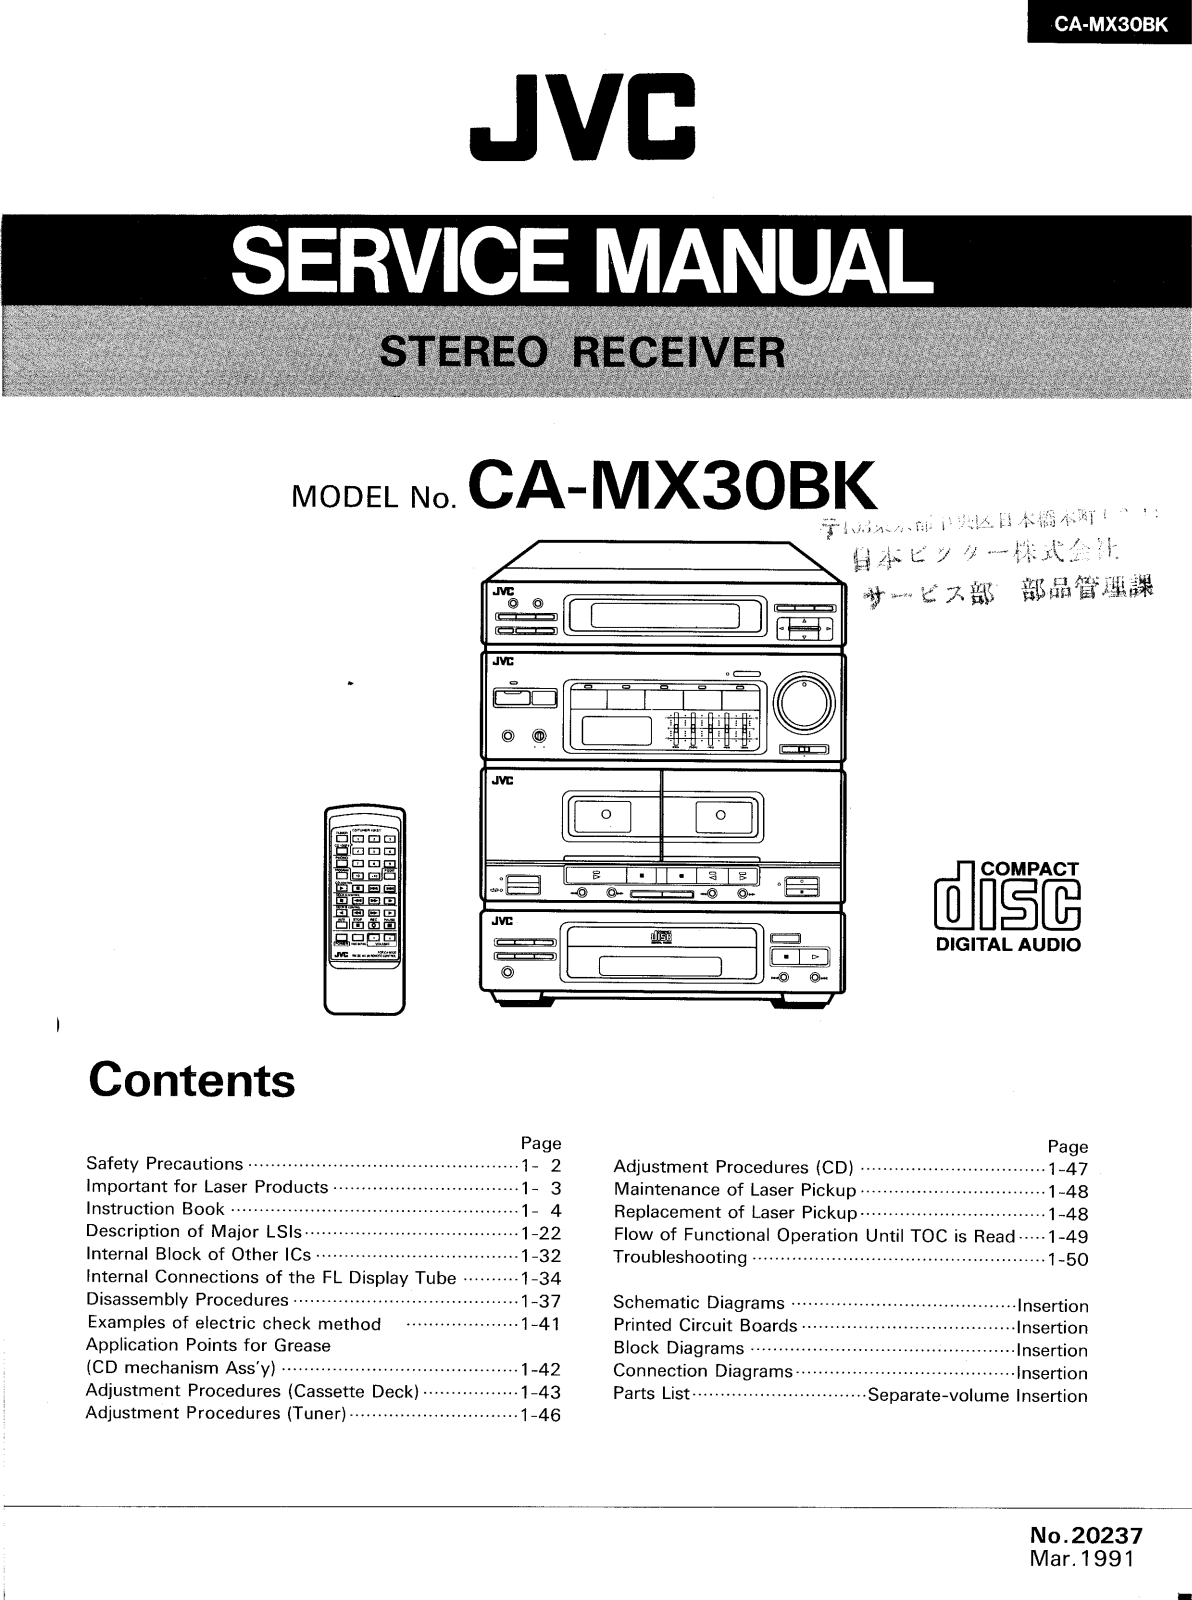 Jvc CA-MX30-BK Service Manual